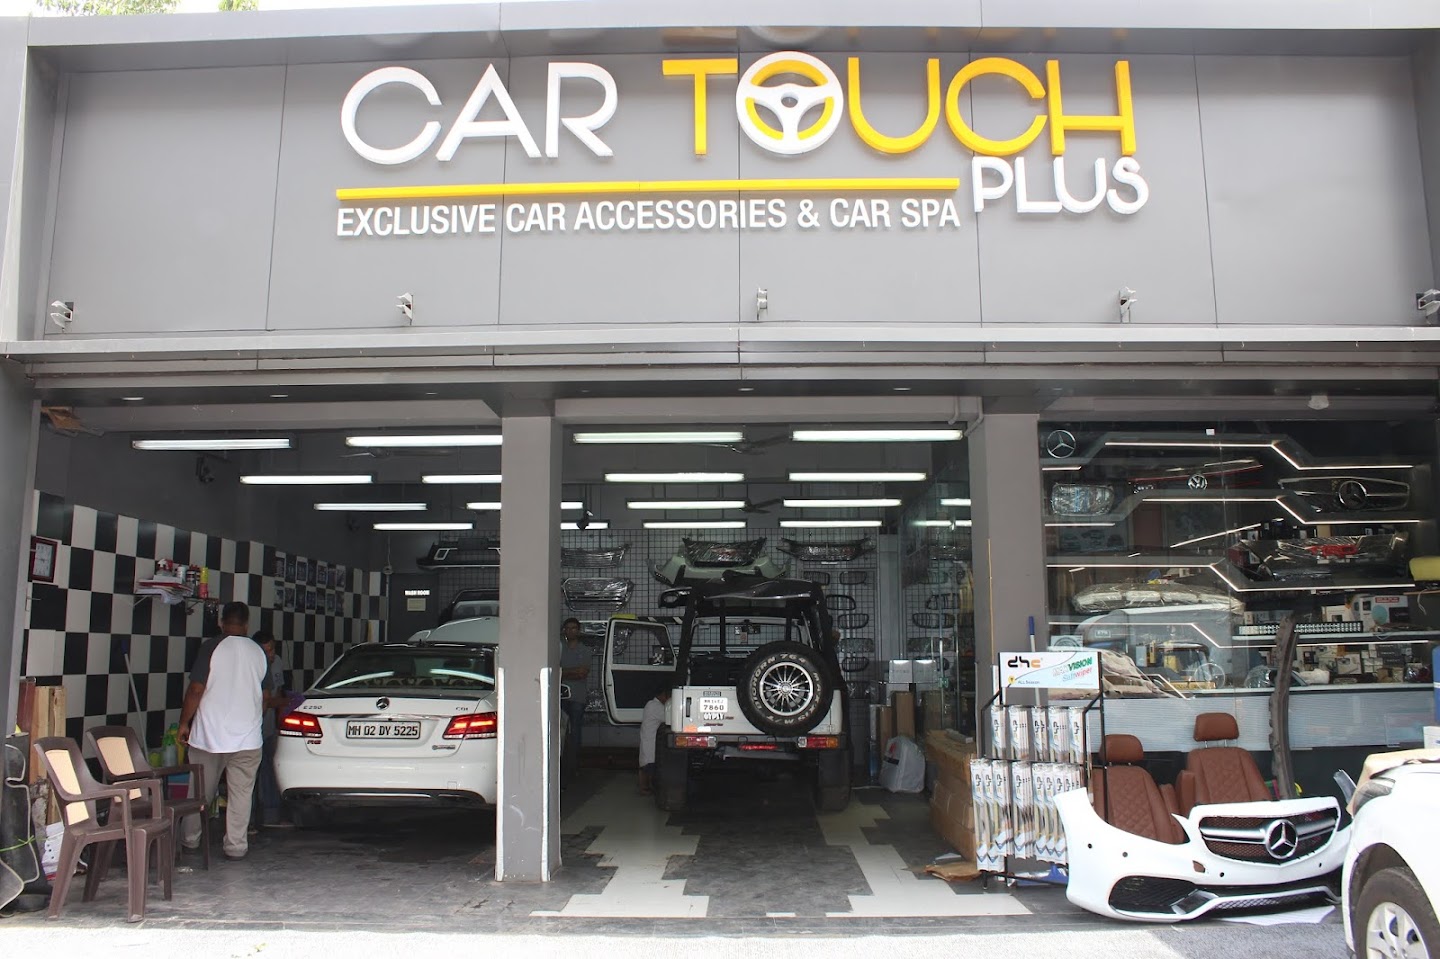 Car Touch Plus - Car Accessories in Santacruz | Car Accessories